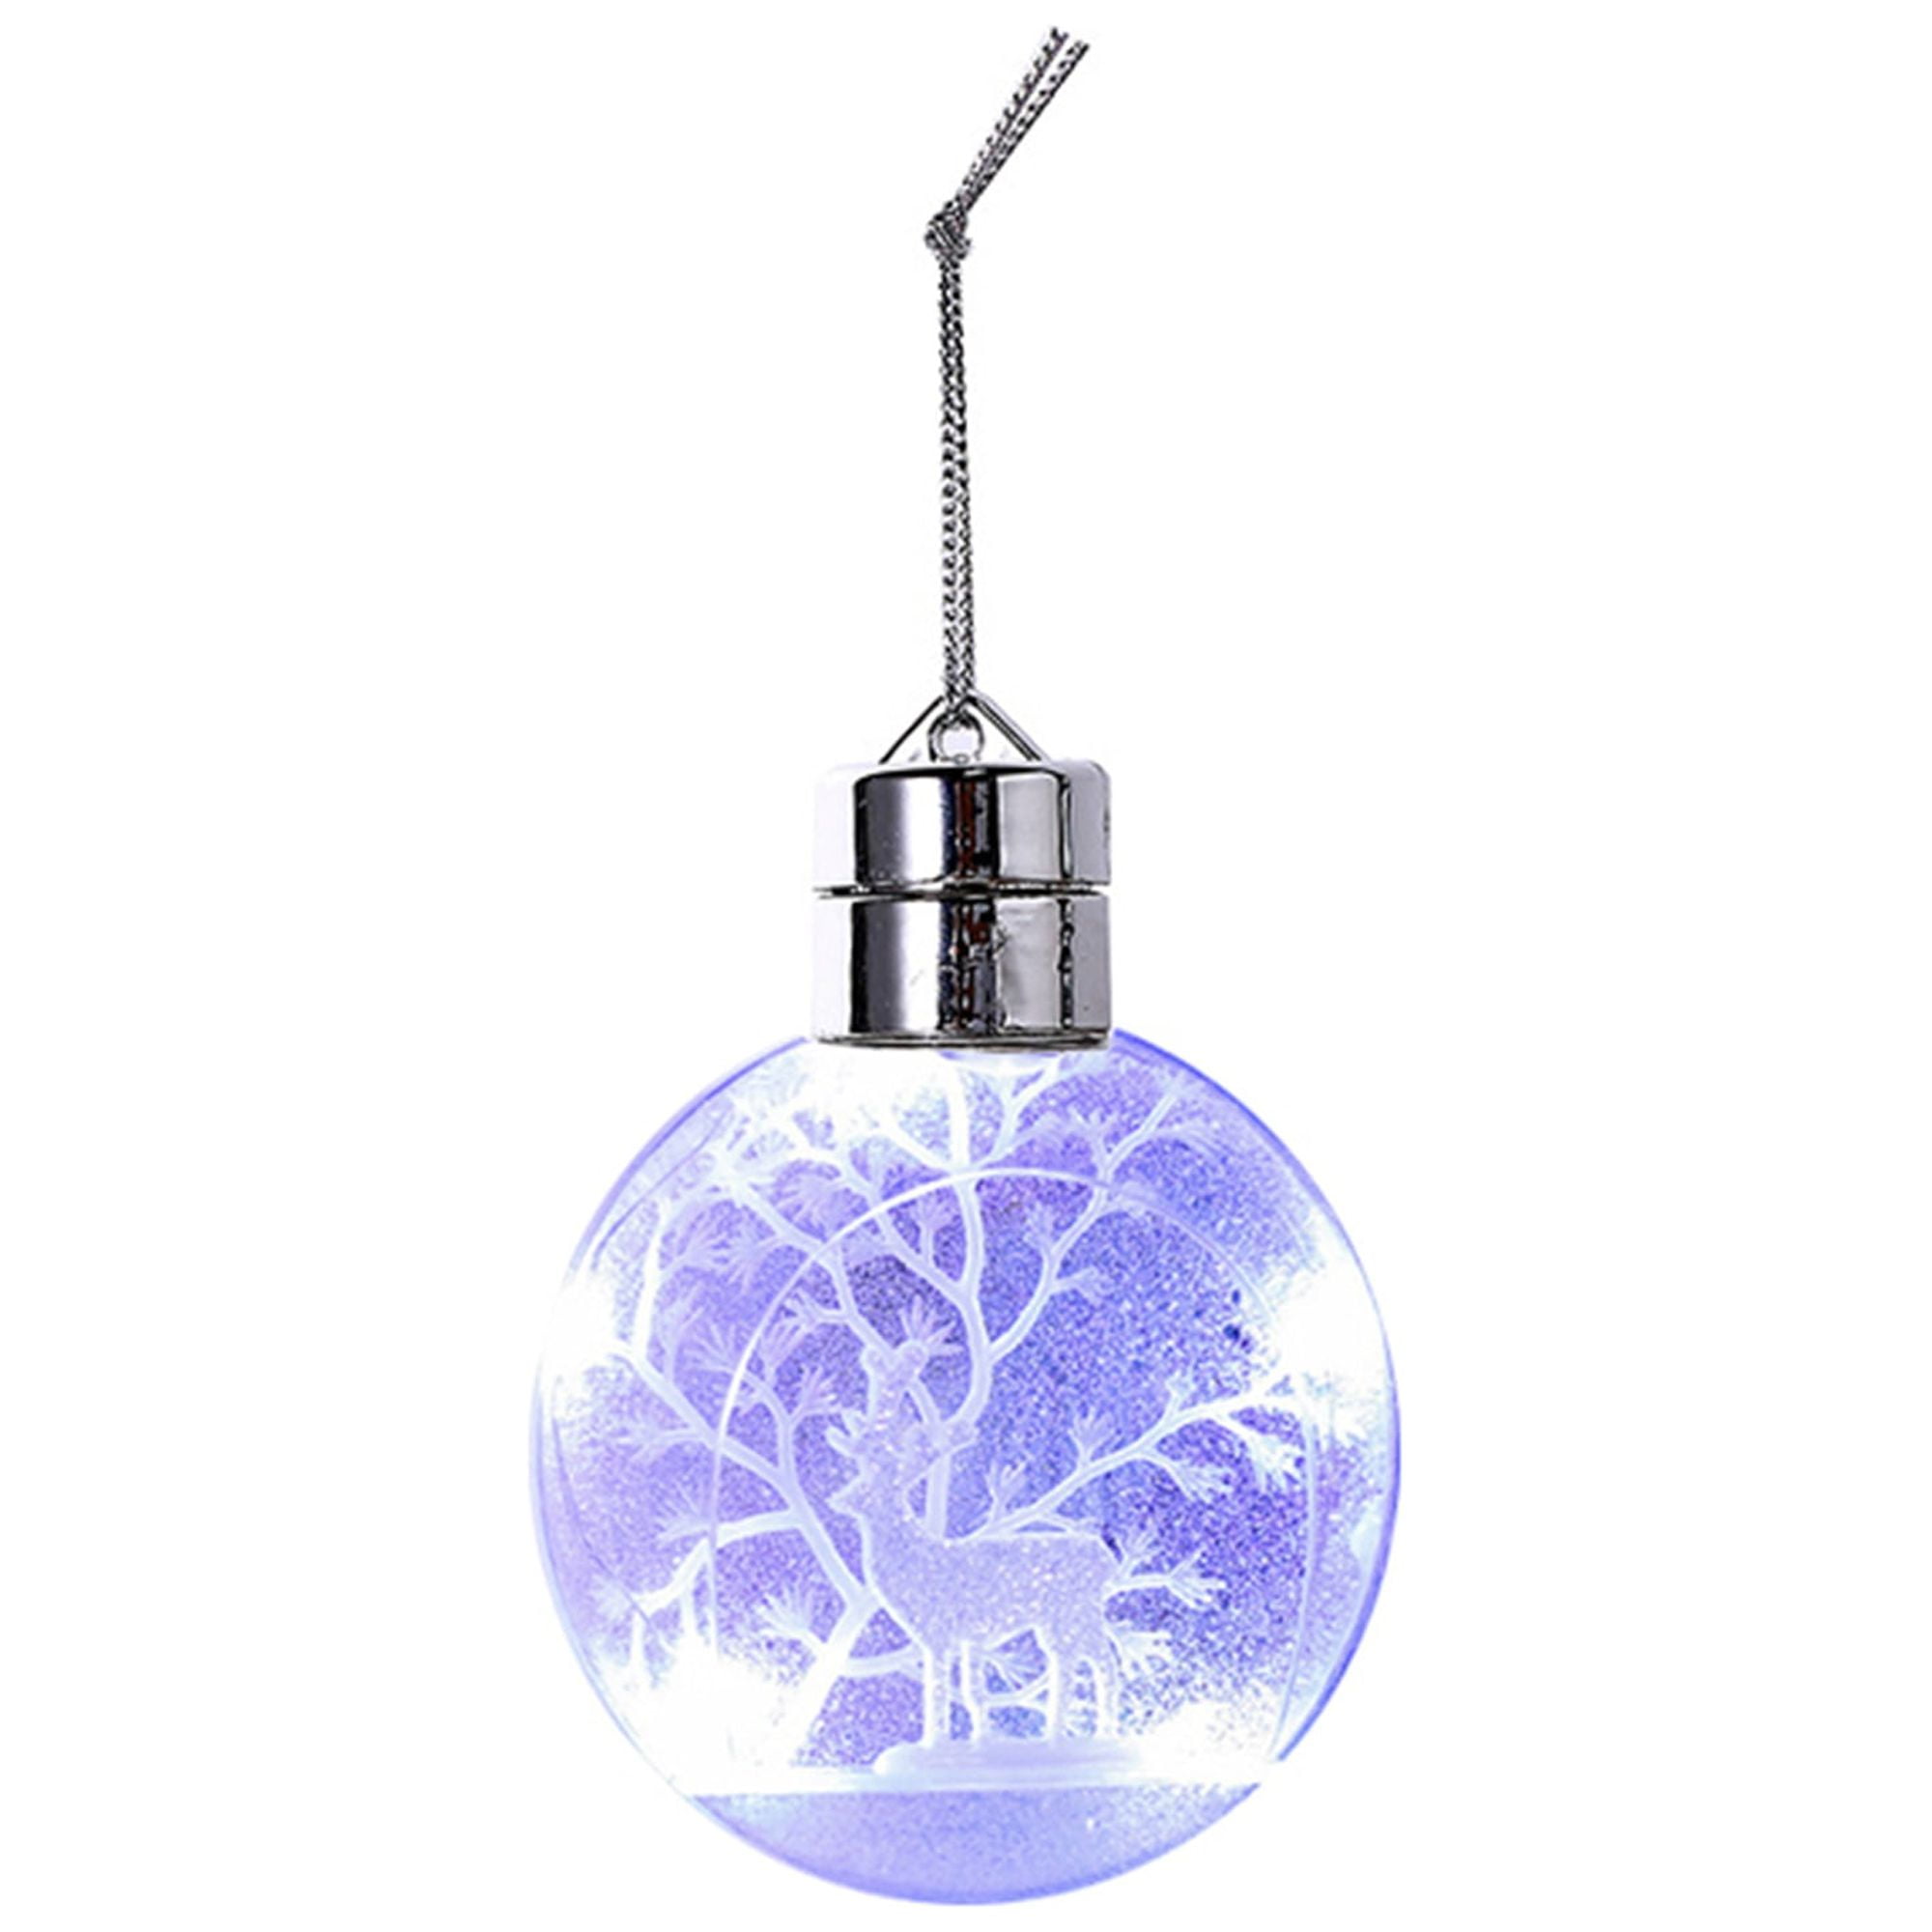 Augper Christmas Ball Ornament, Lighted Hanging Plastic Ball